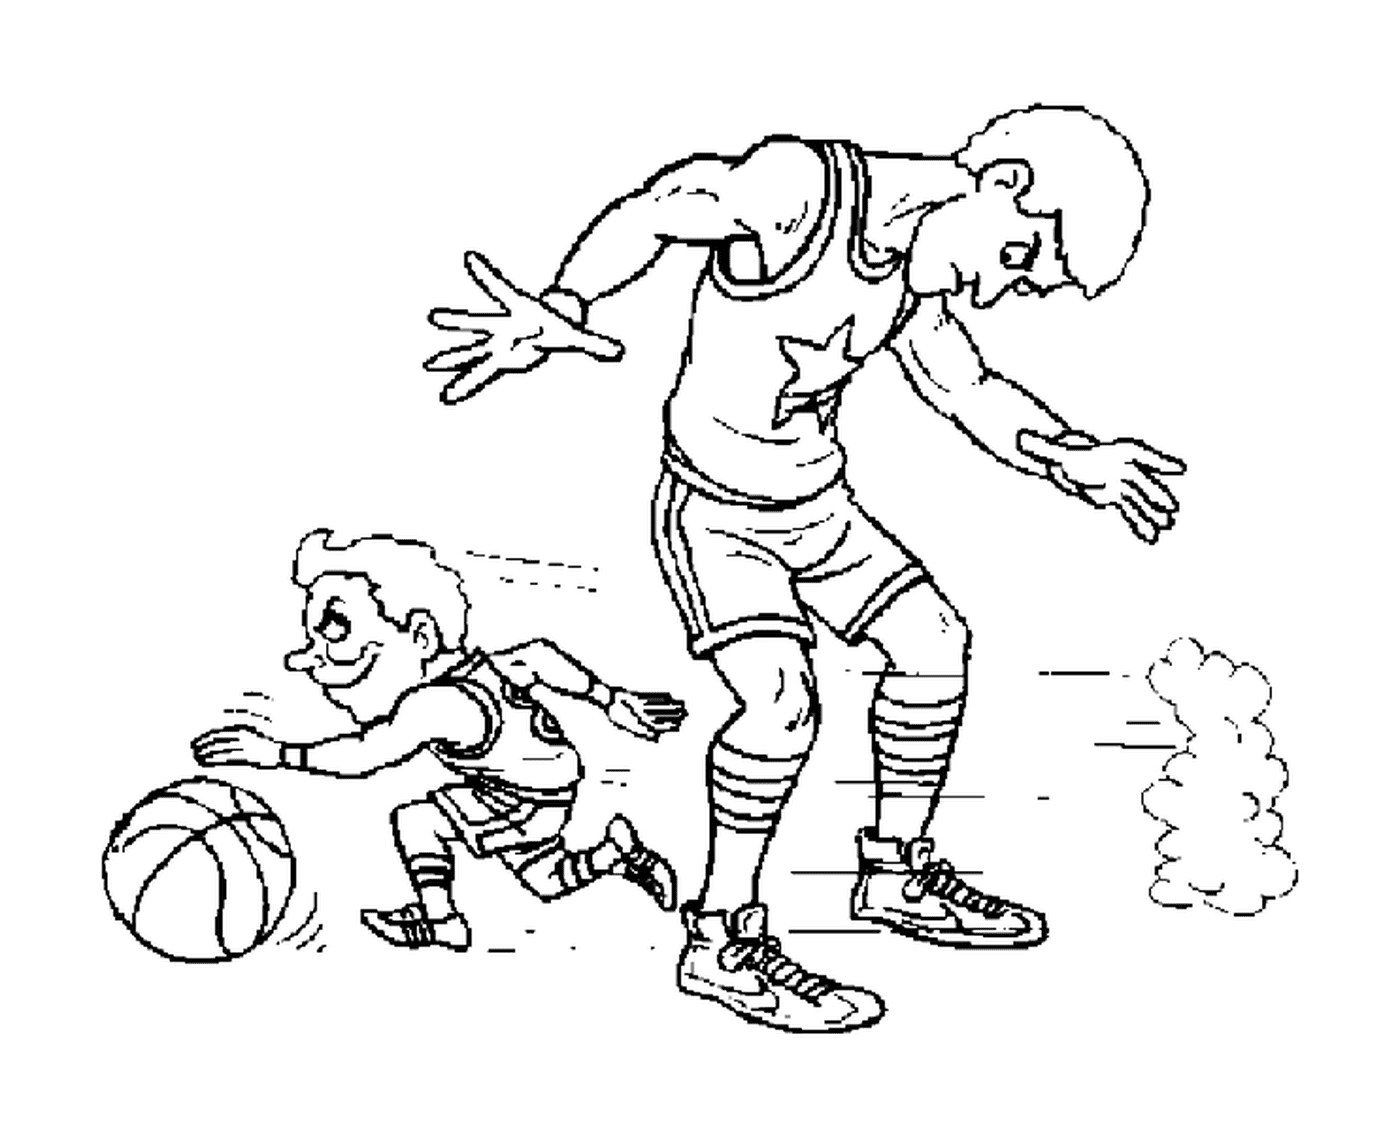  لاعب صغير يمر تحت أرجل لاعب آخر 